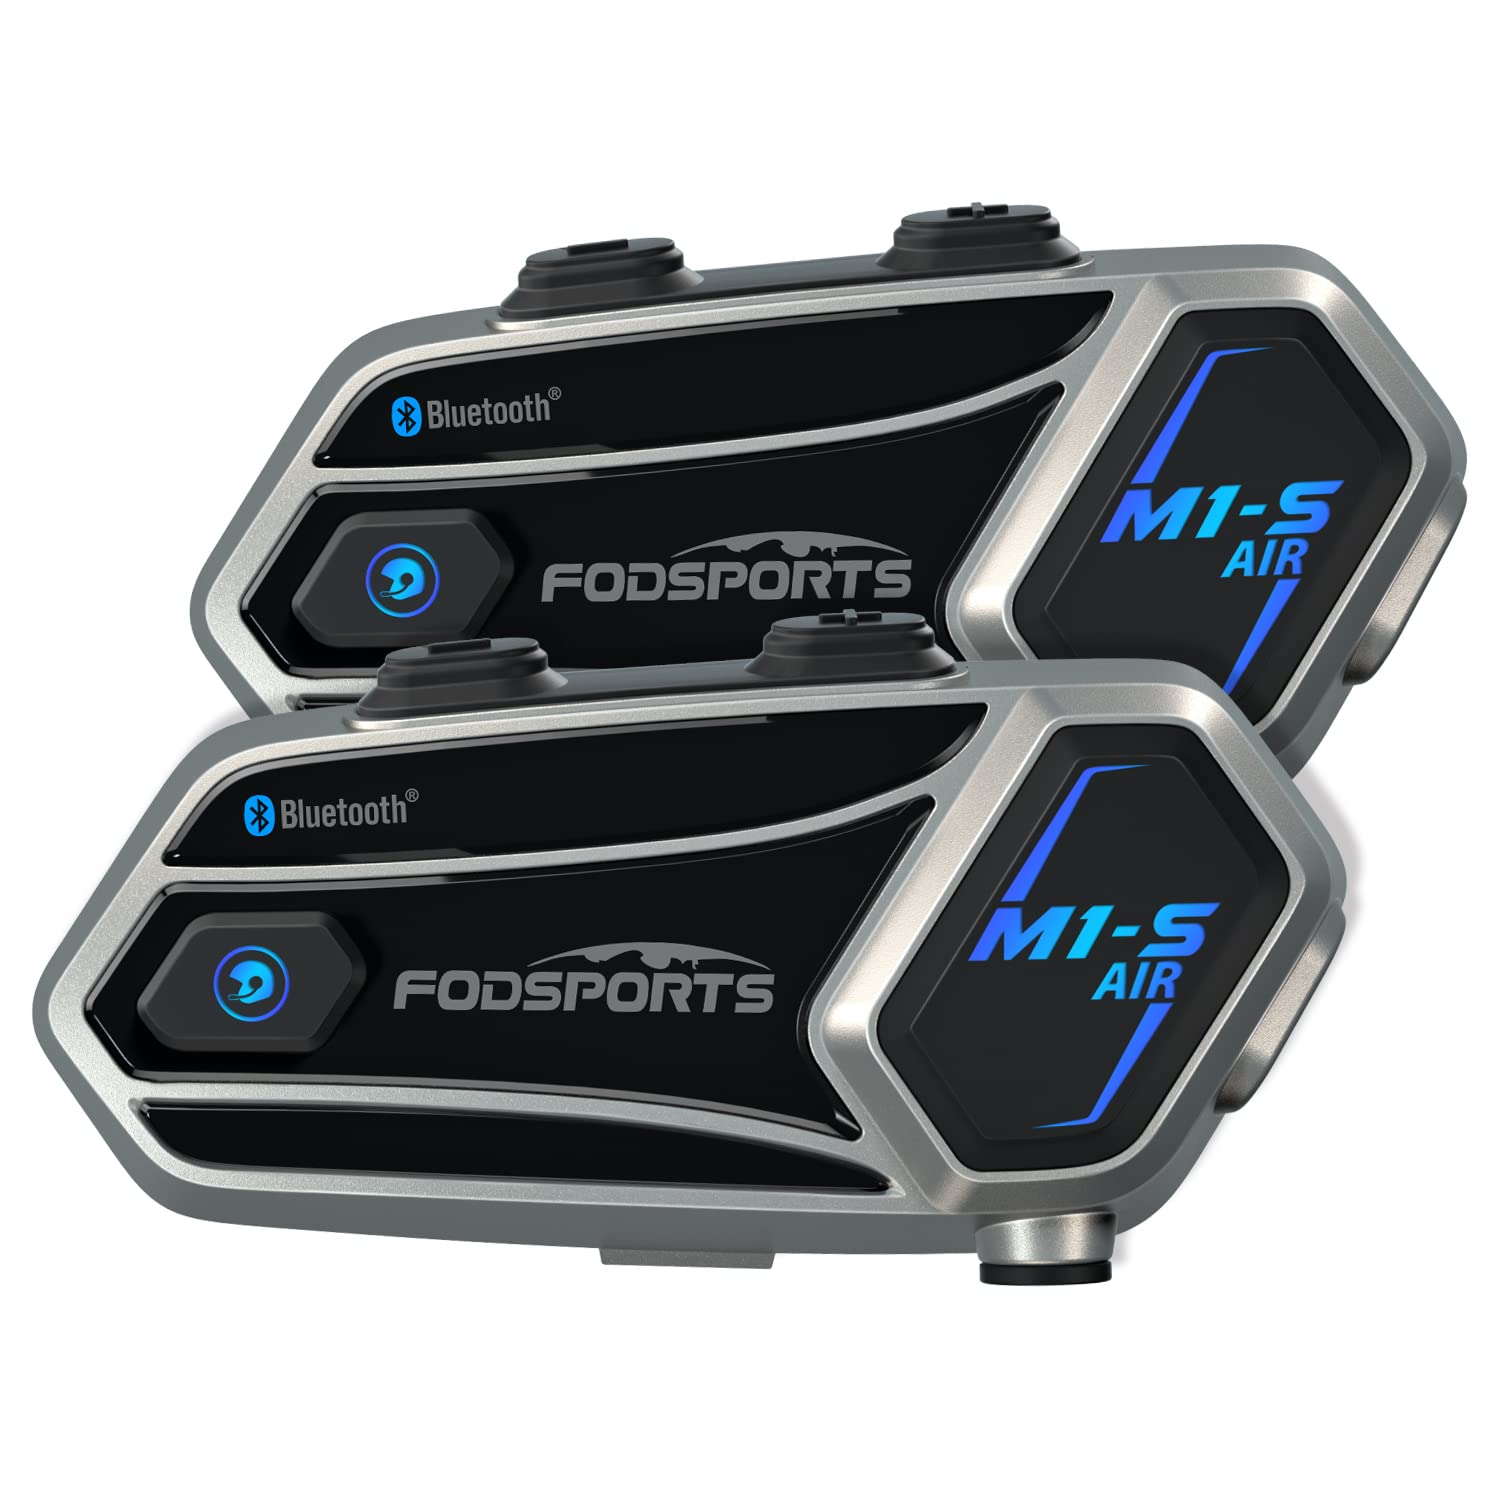 Fodsports M1-S AIR Motorrad Headset, Motorradhelm Bluetooth Headset, Motorrad Kommunikationssystem mit 900 mAh Batterie Musik teilen Mikrofon stumm Funktion